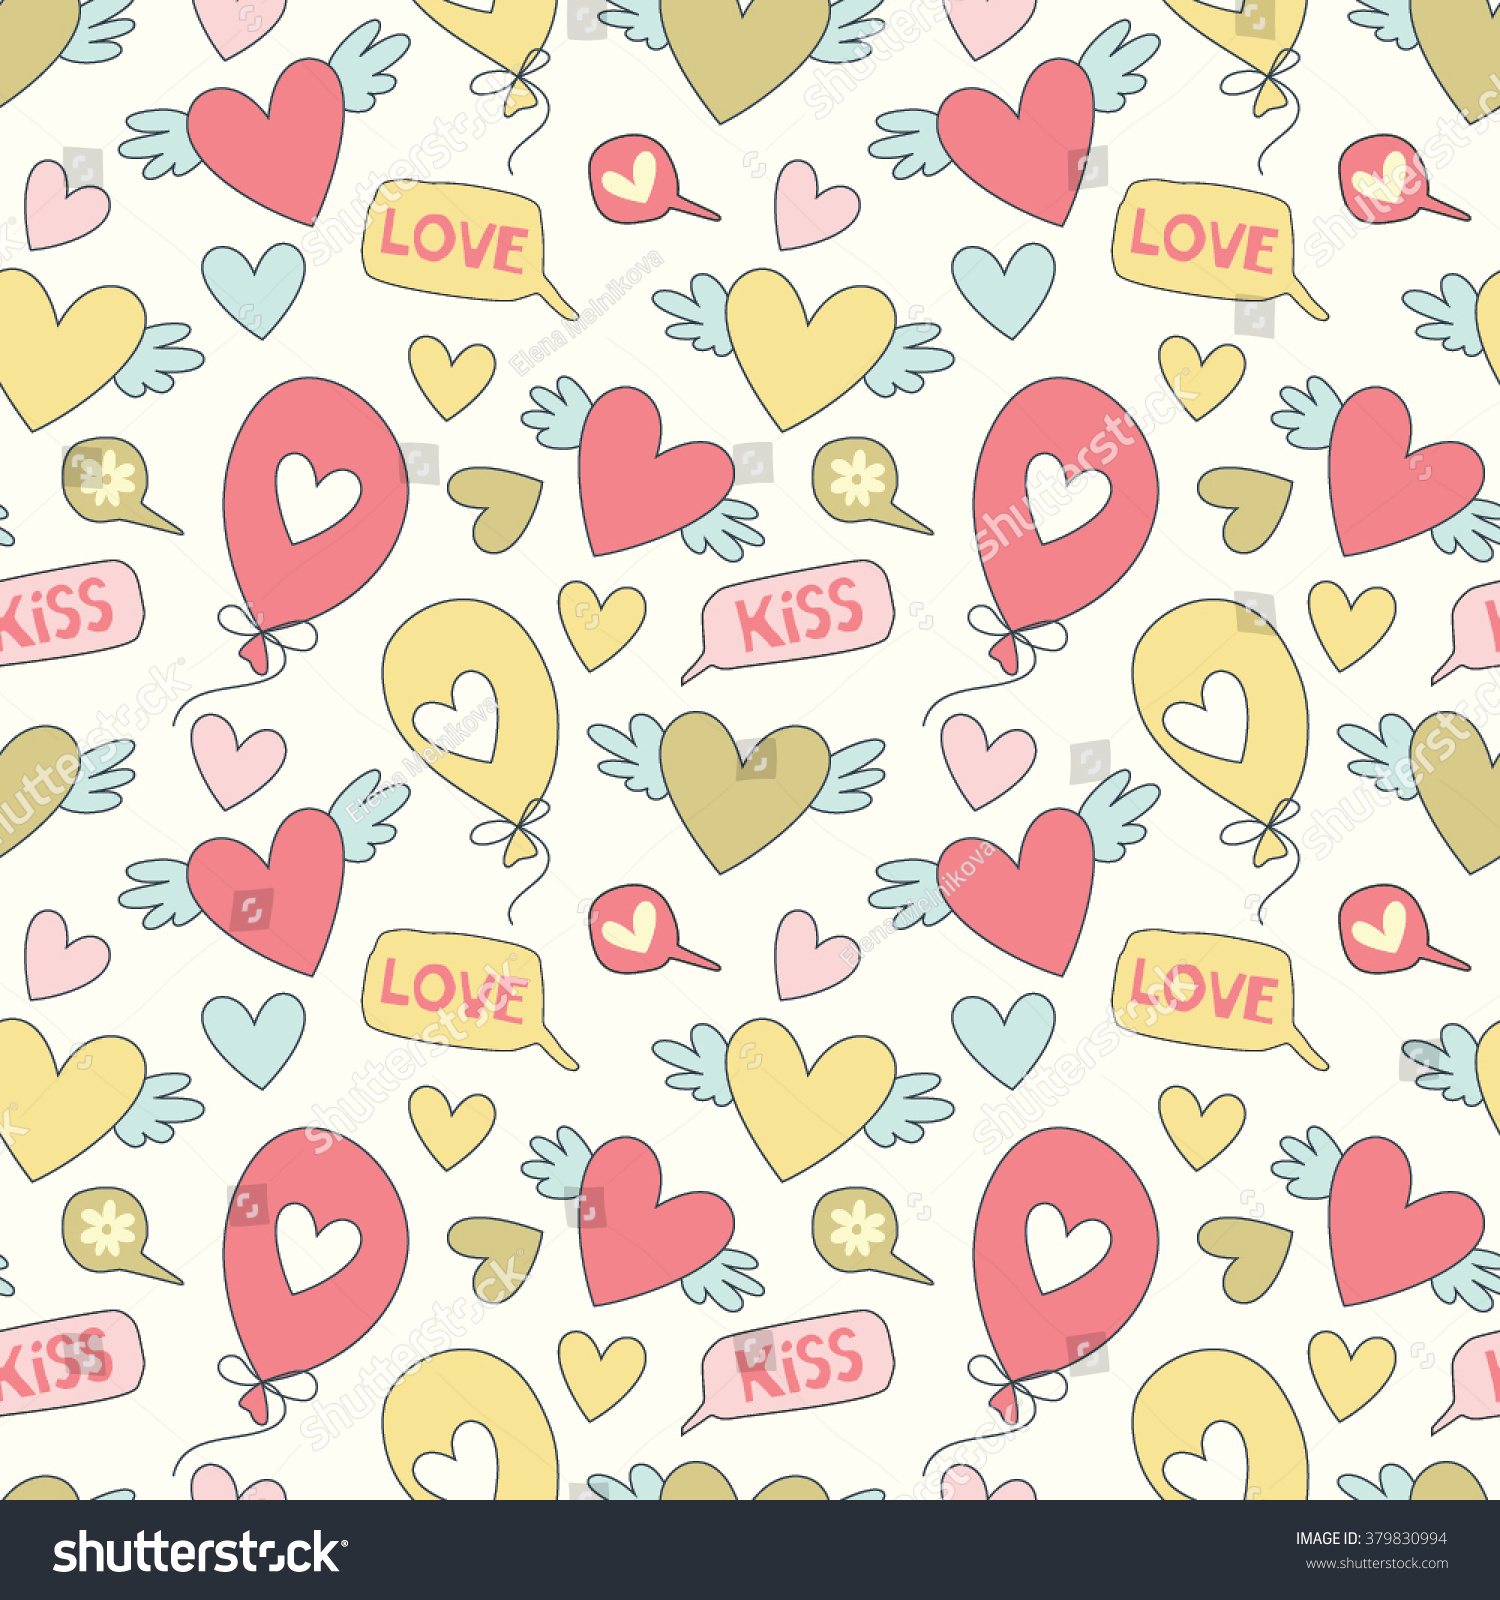 Cartoon patterns cute wallpapers hearts speech stock vector royalty free